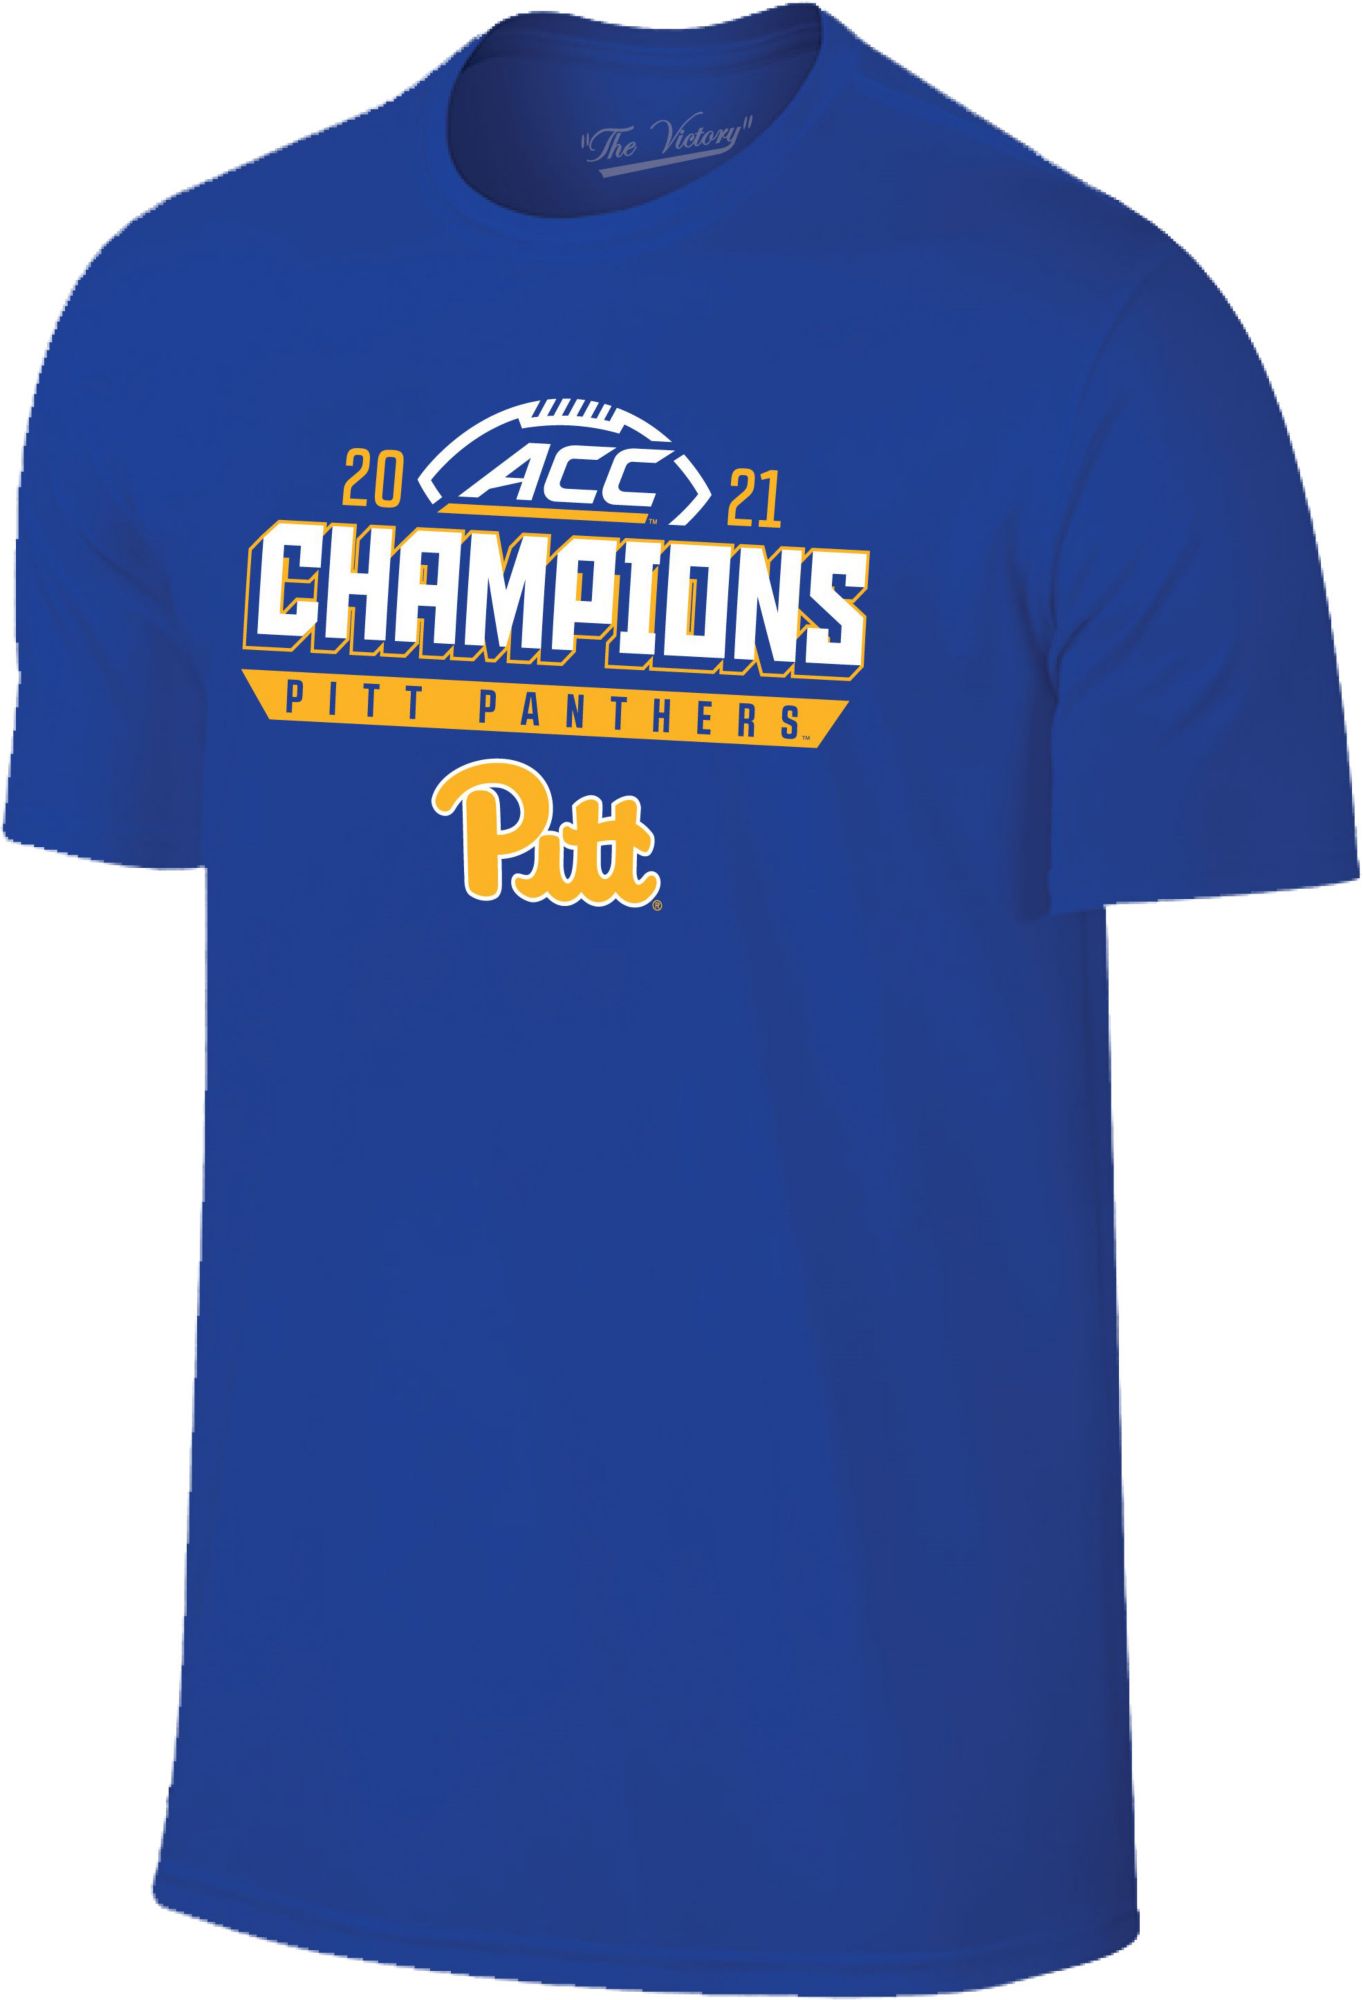 The Victory Men's 2021 ACC Football Champions Pitt Panthers Locker Room T-Shirt